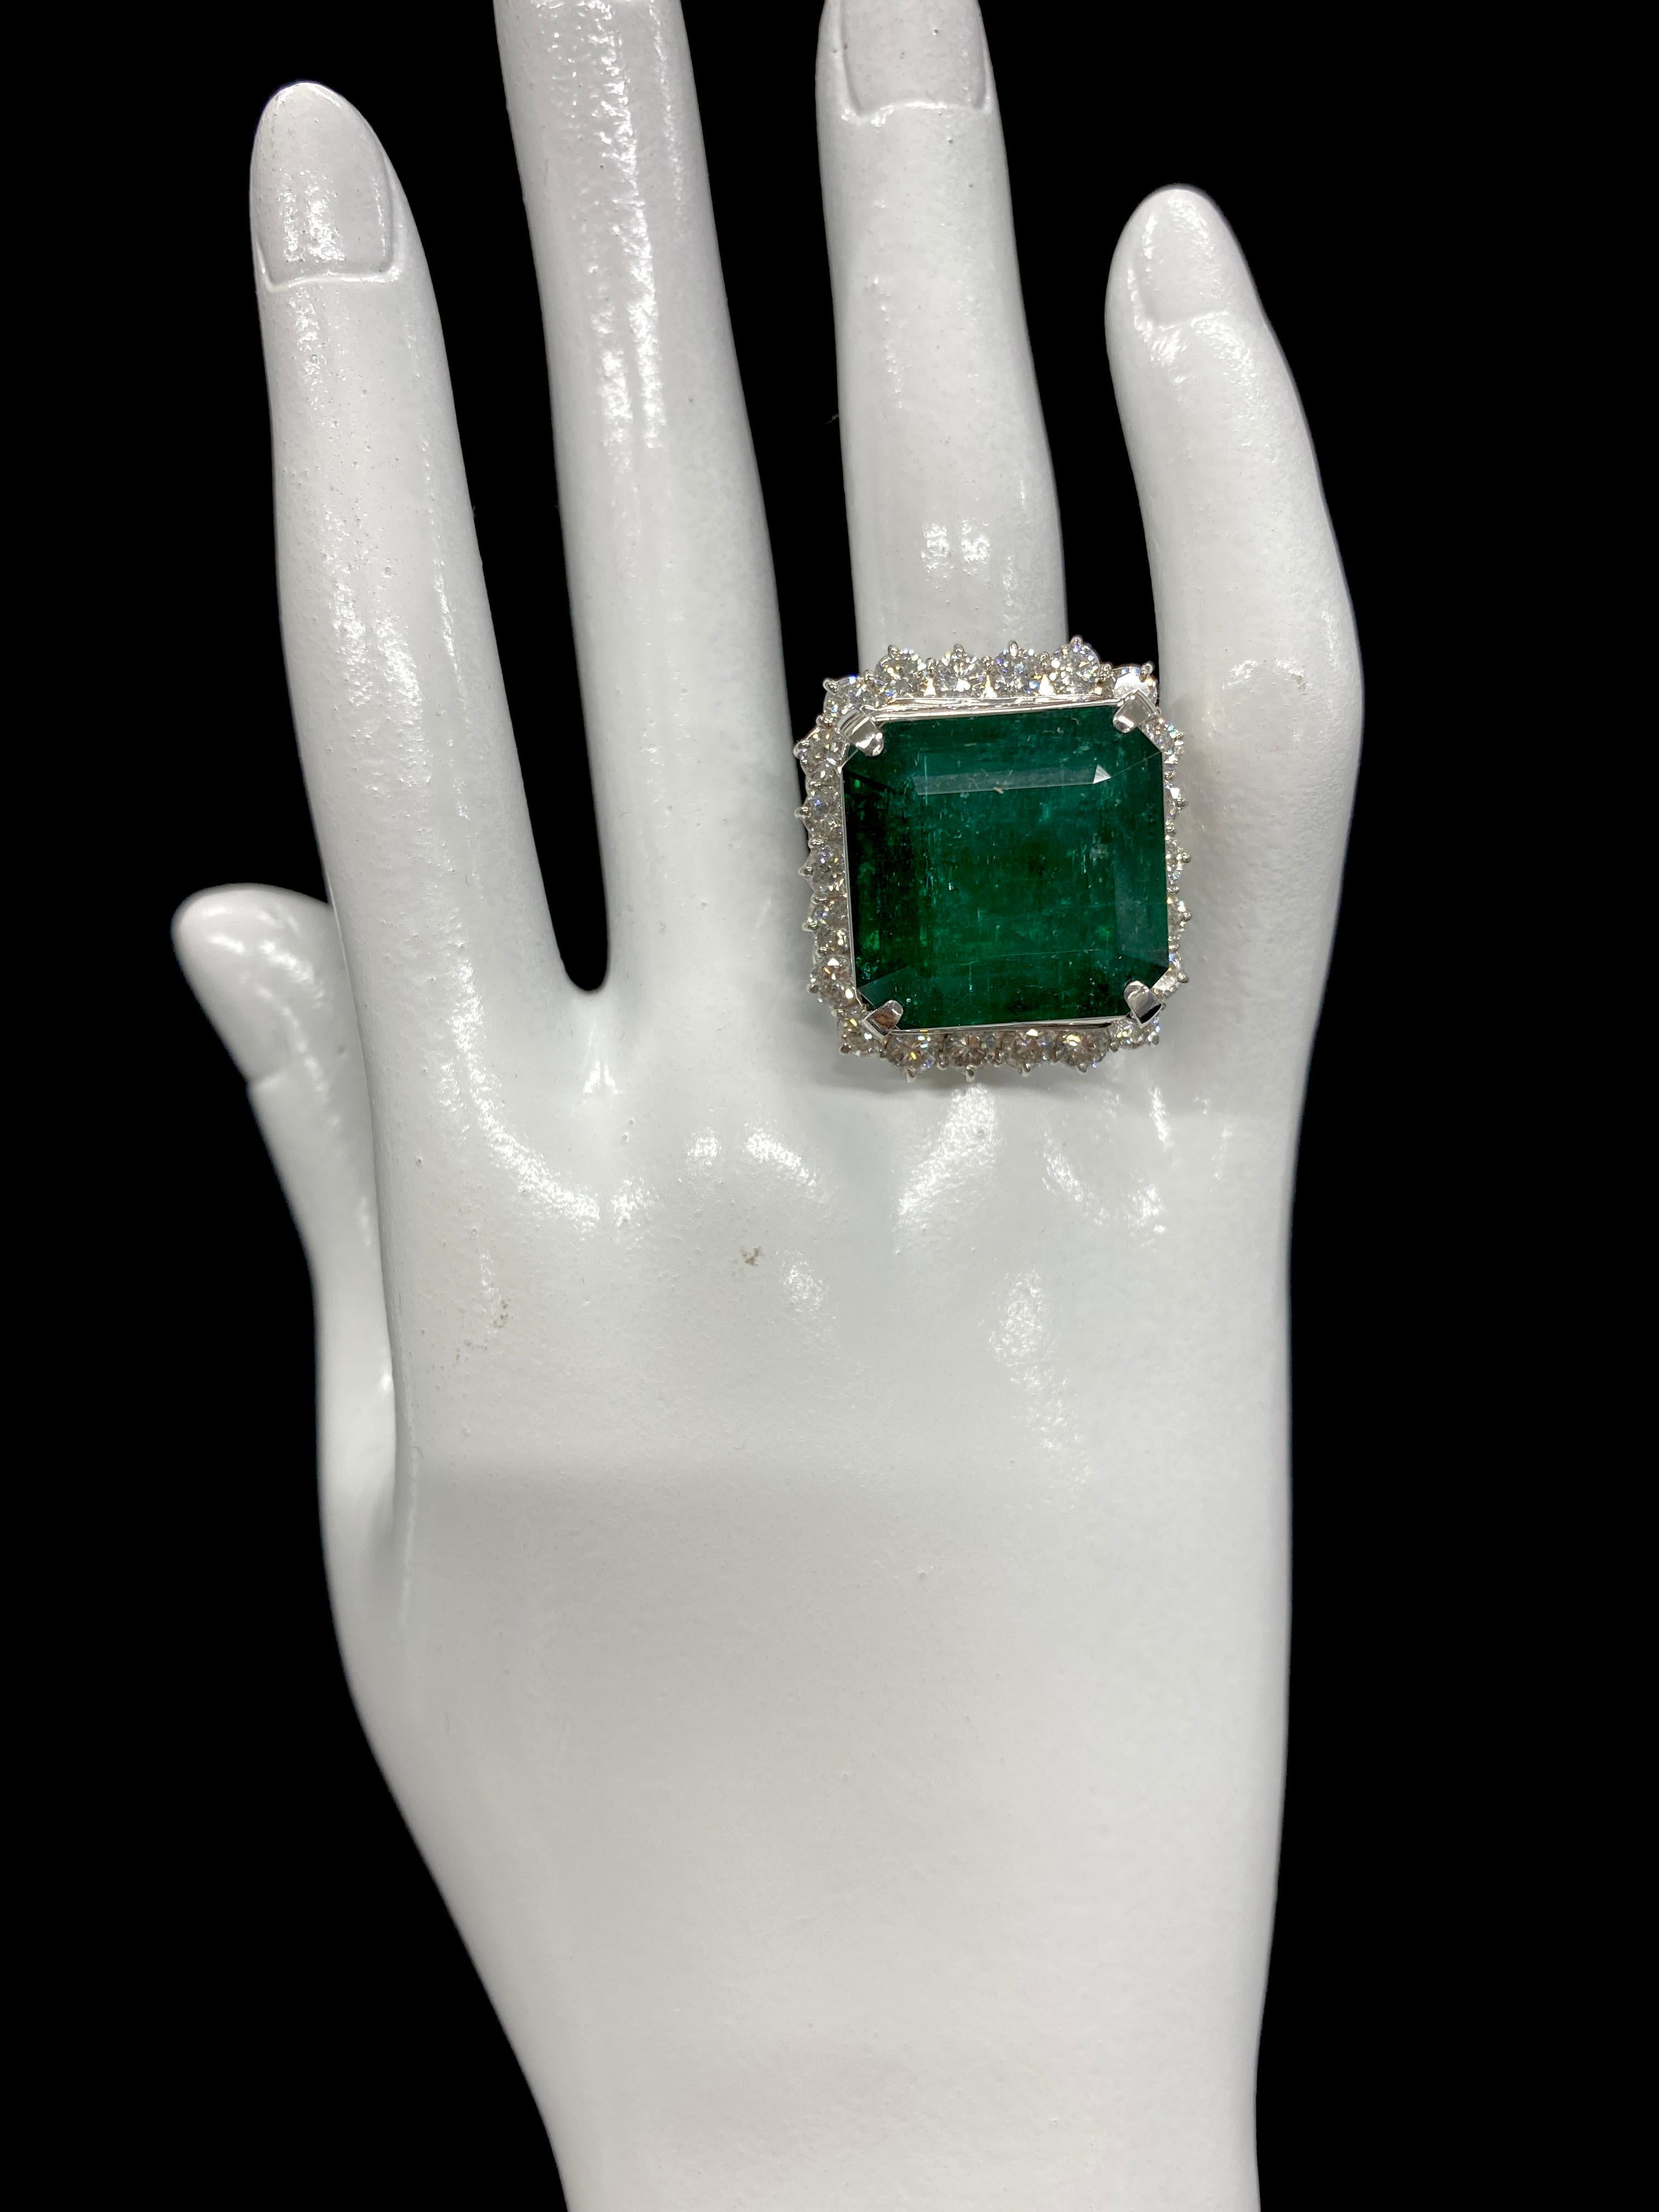 29.29 Carat Natural Emerald and Diamond Cocktail Ring Set in Platinum 1